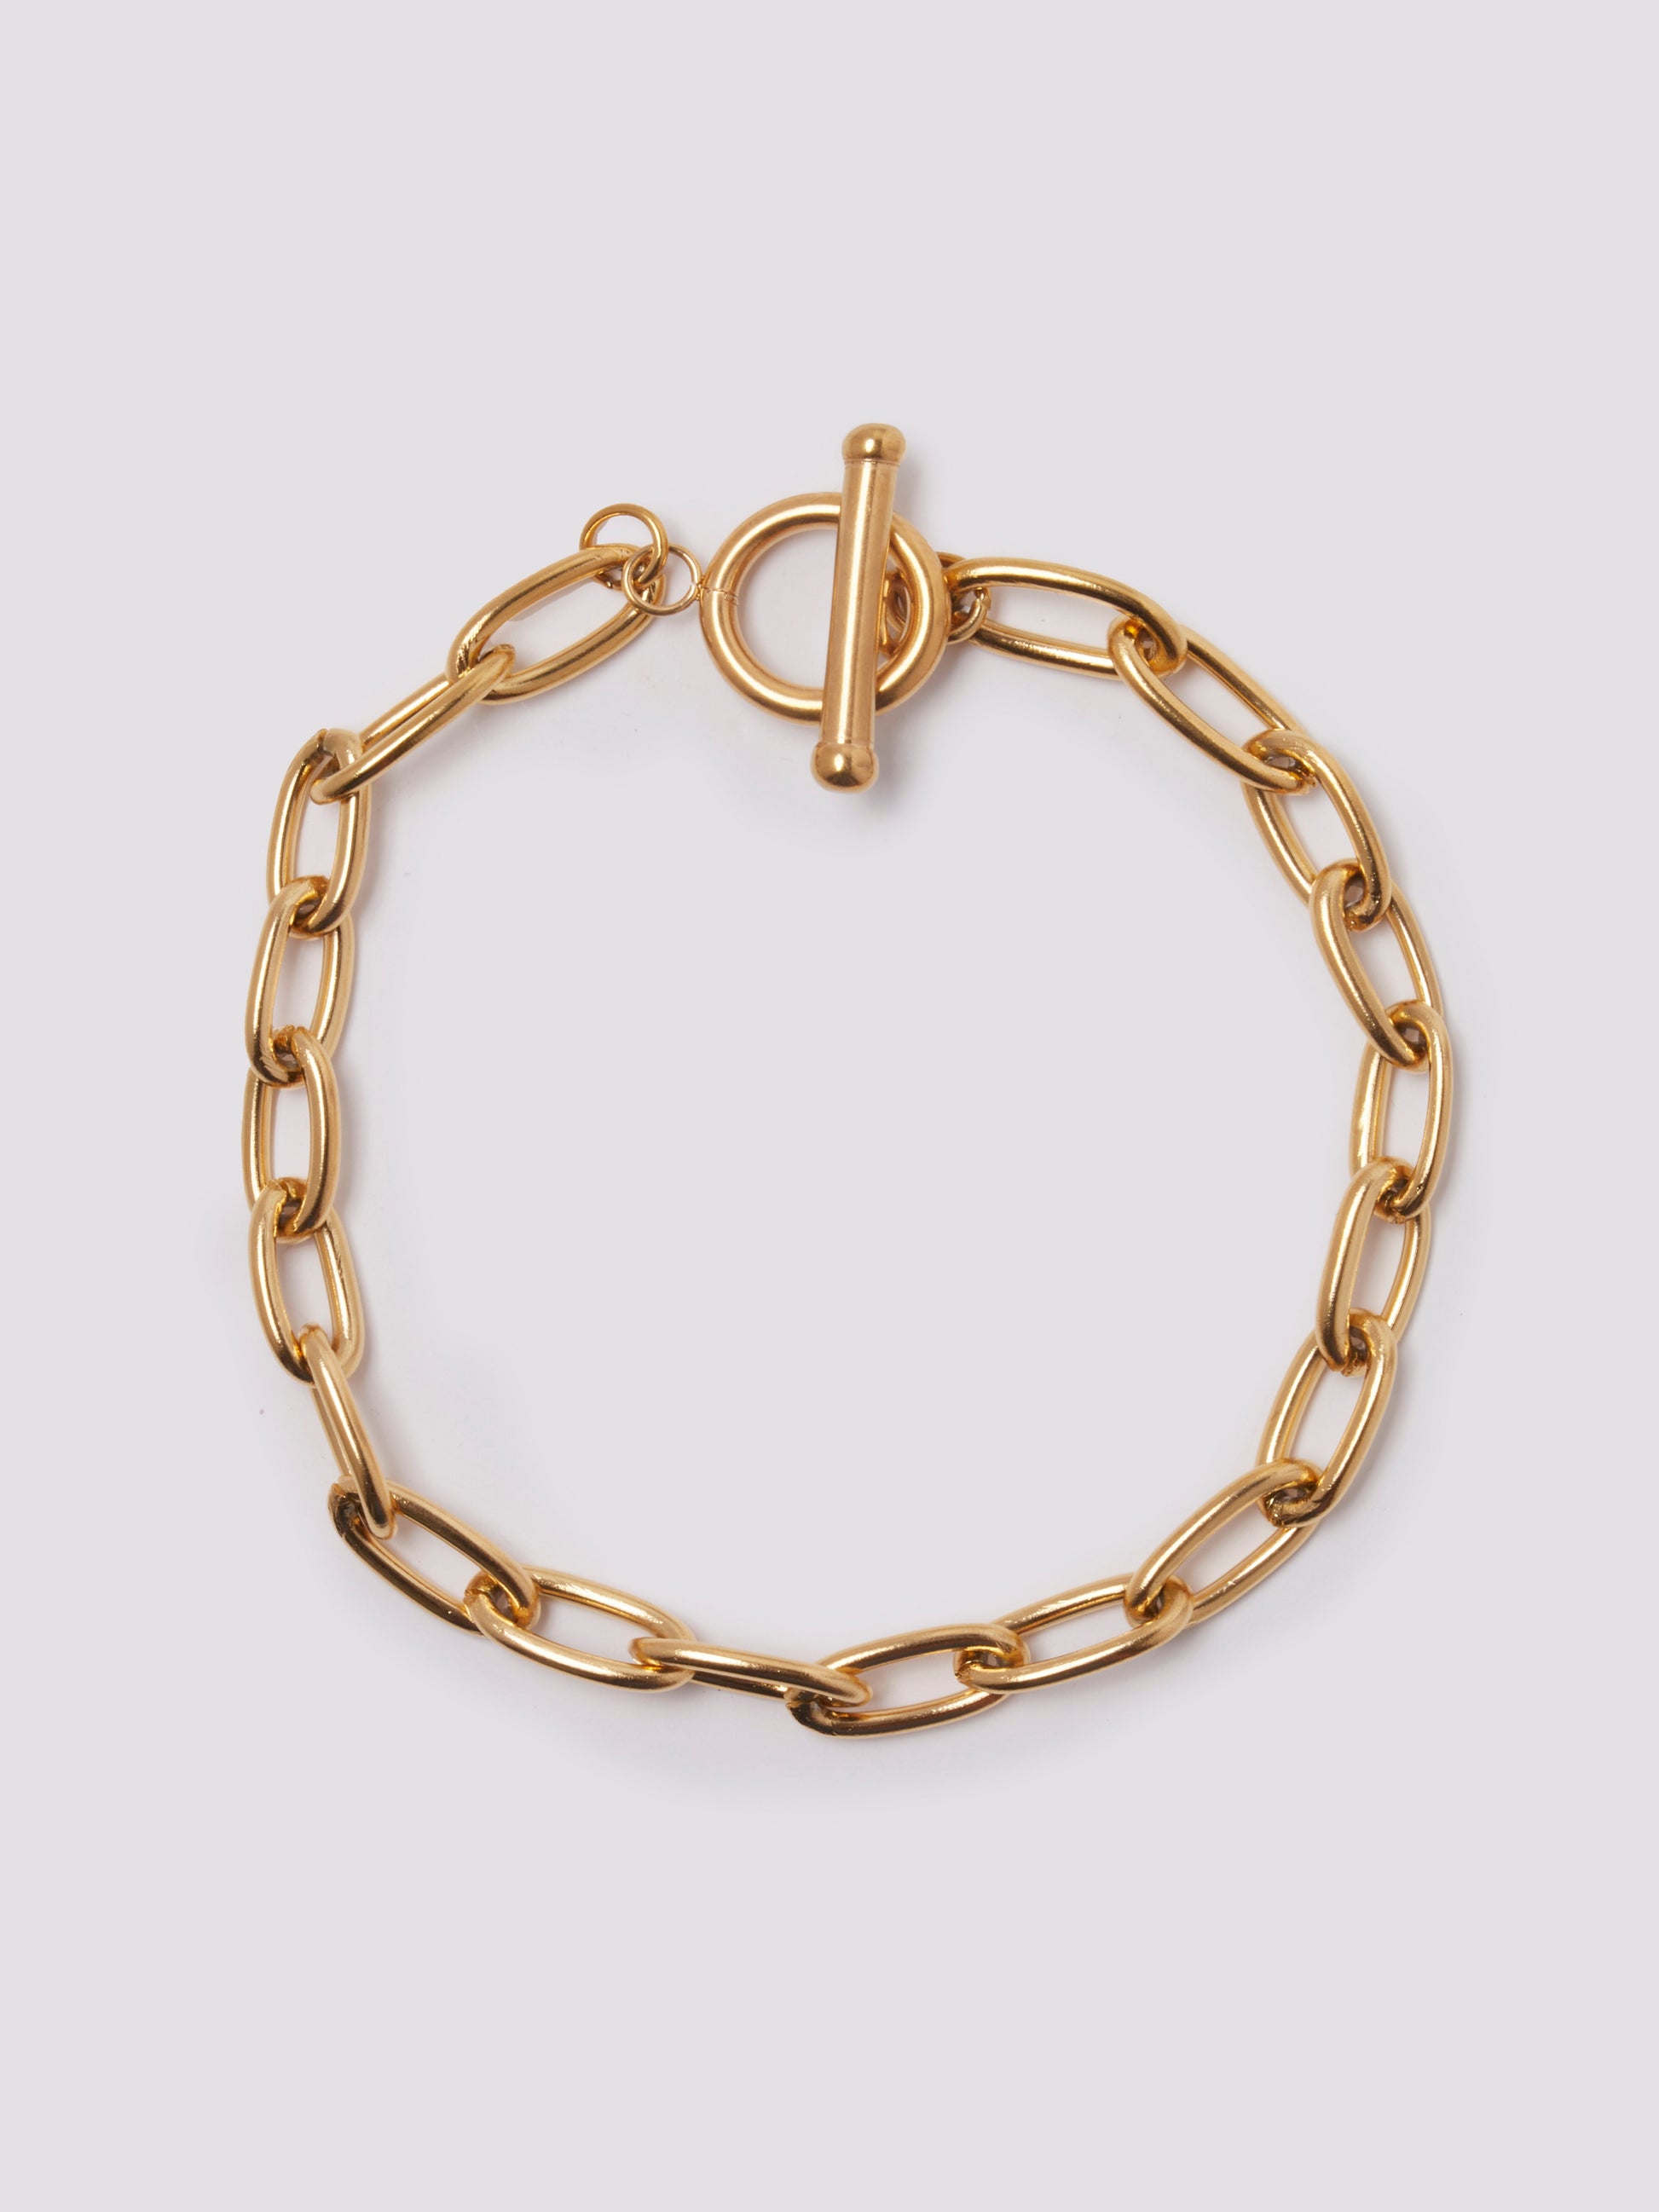 Gold T-Bar Style Bracelet - Platedbymaria